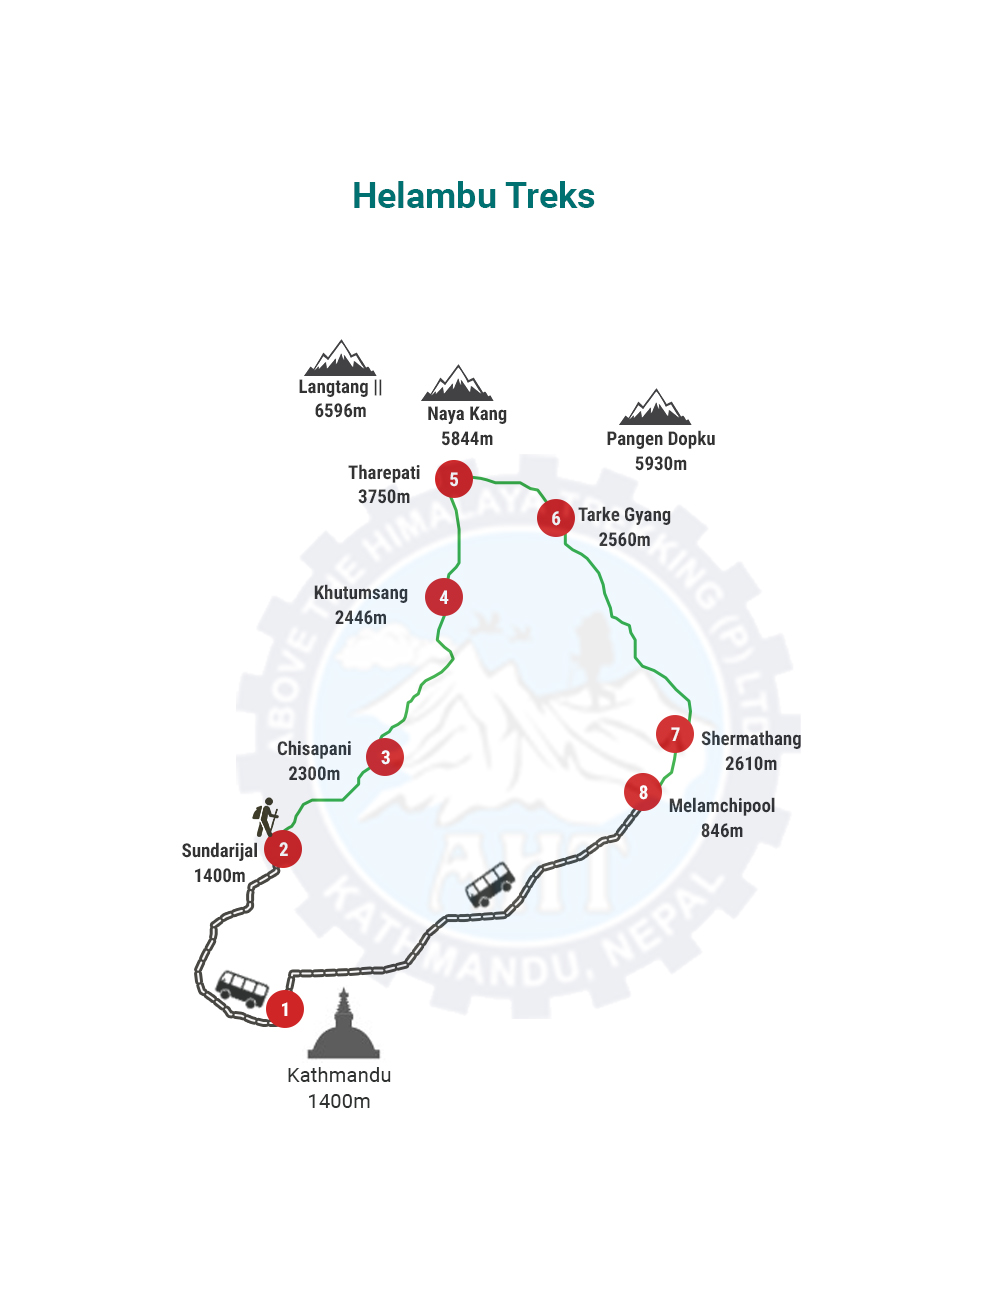 Helambu trek map